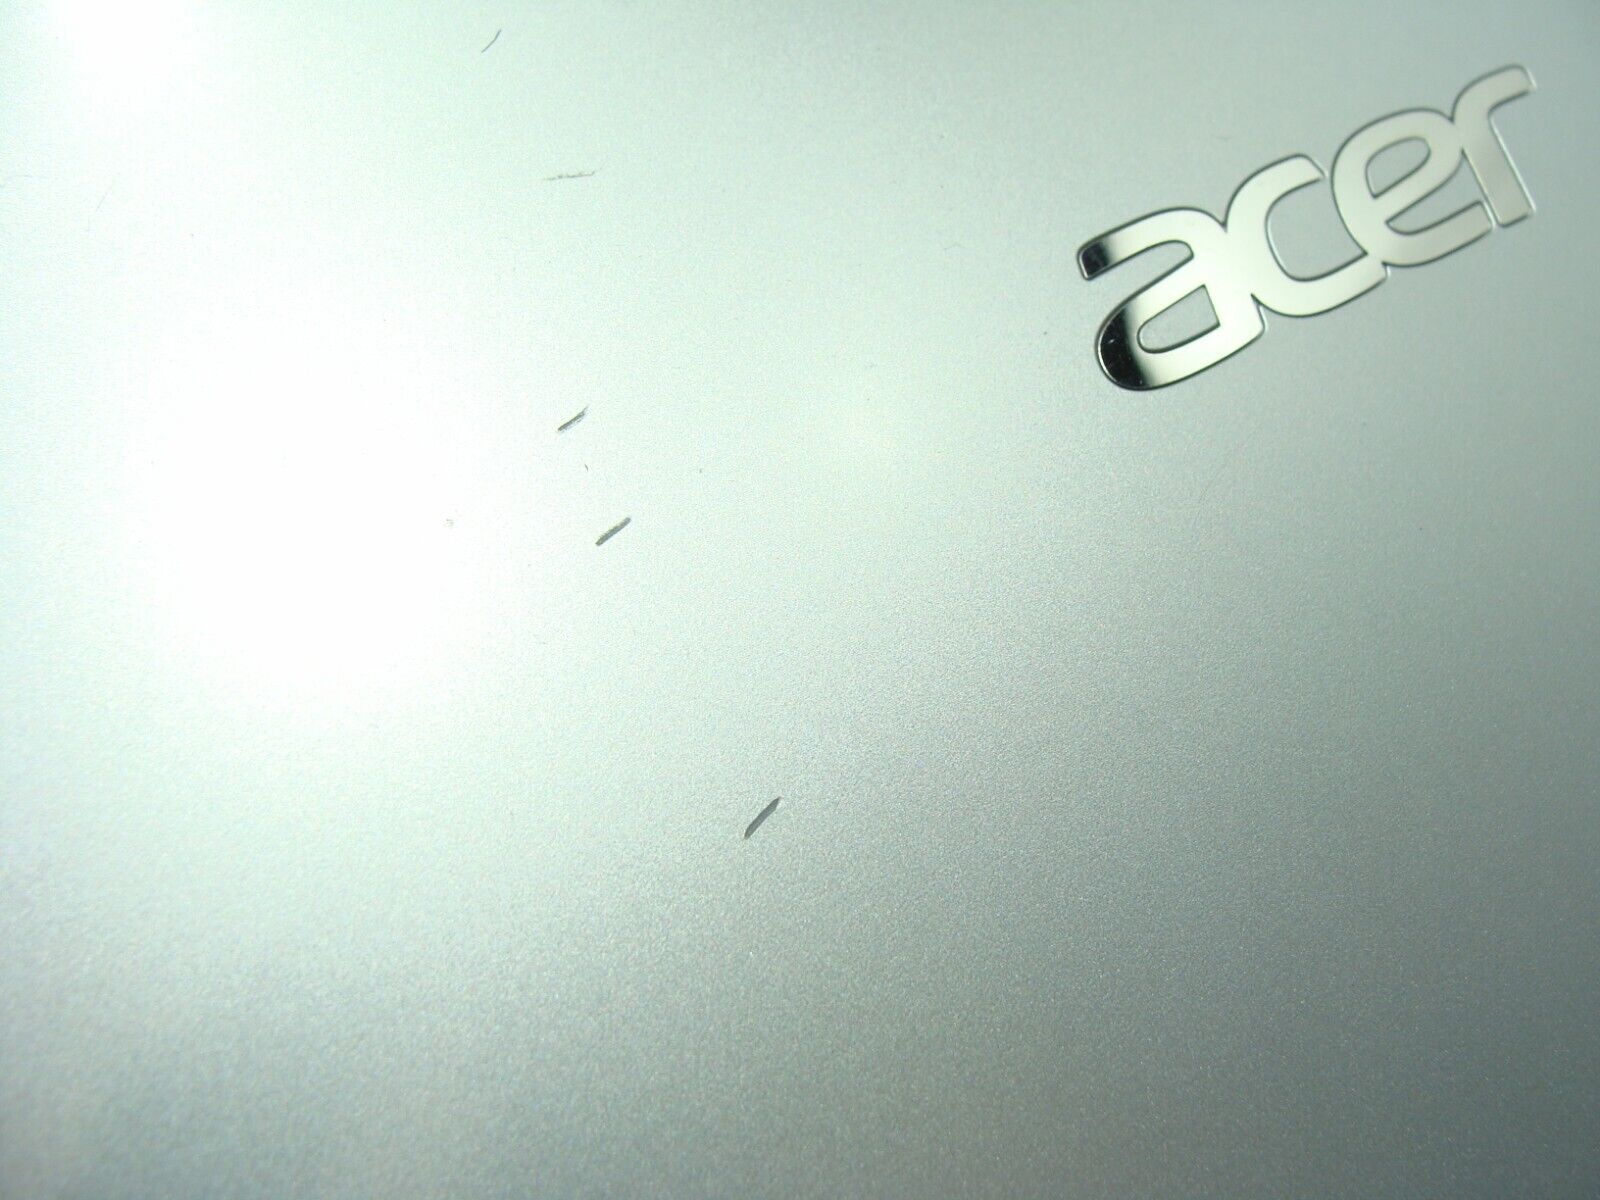 Acer Aspire V5-551-8401 15.6